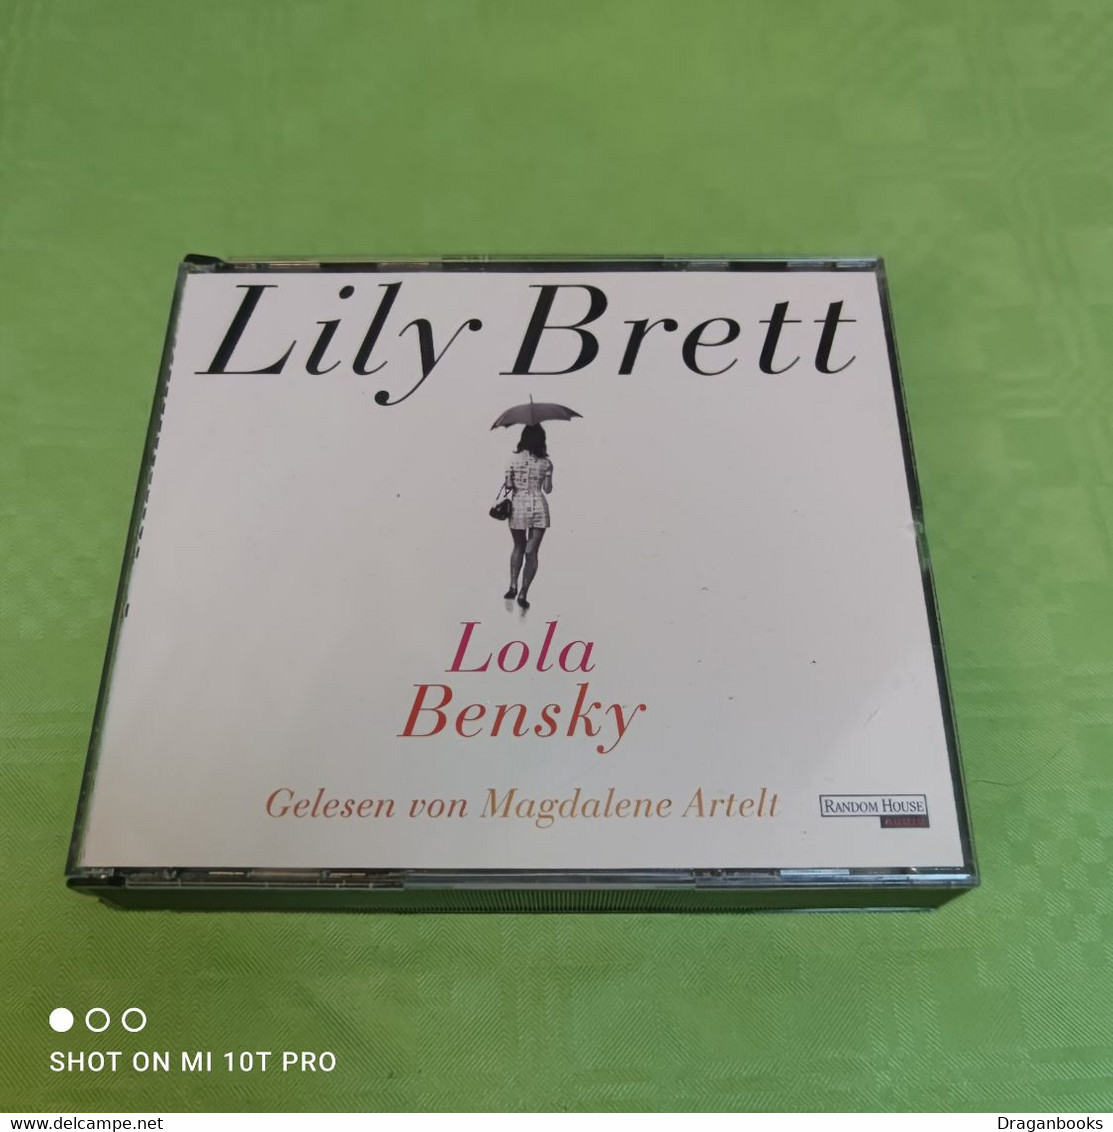 Lily Brett - Lola Bensky - CD